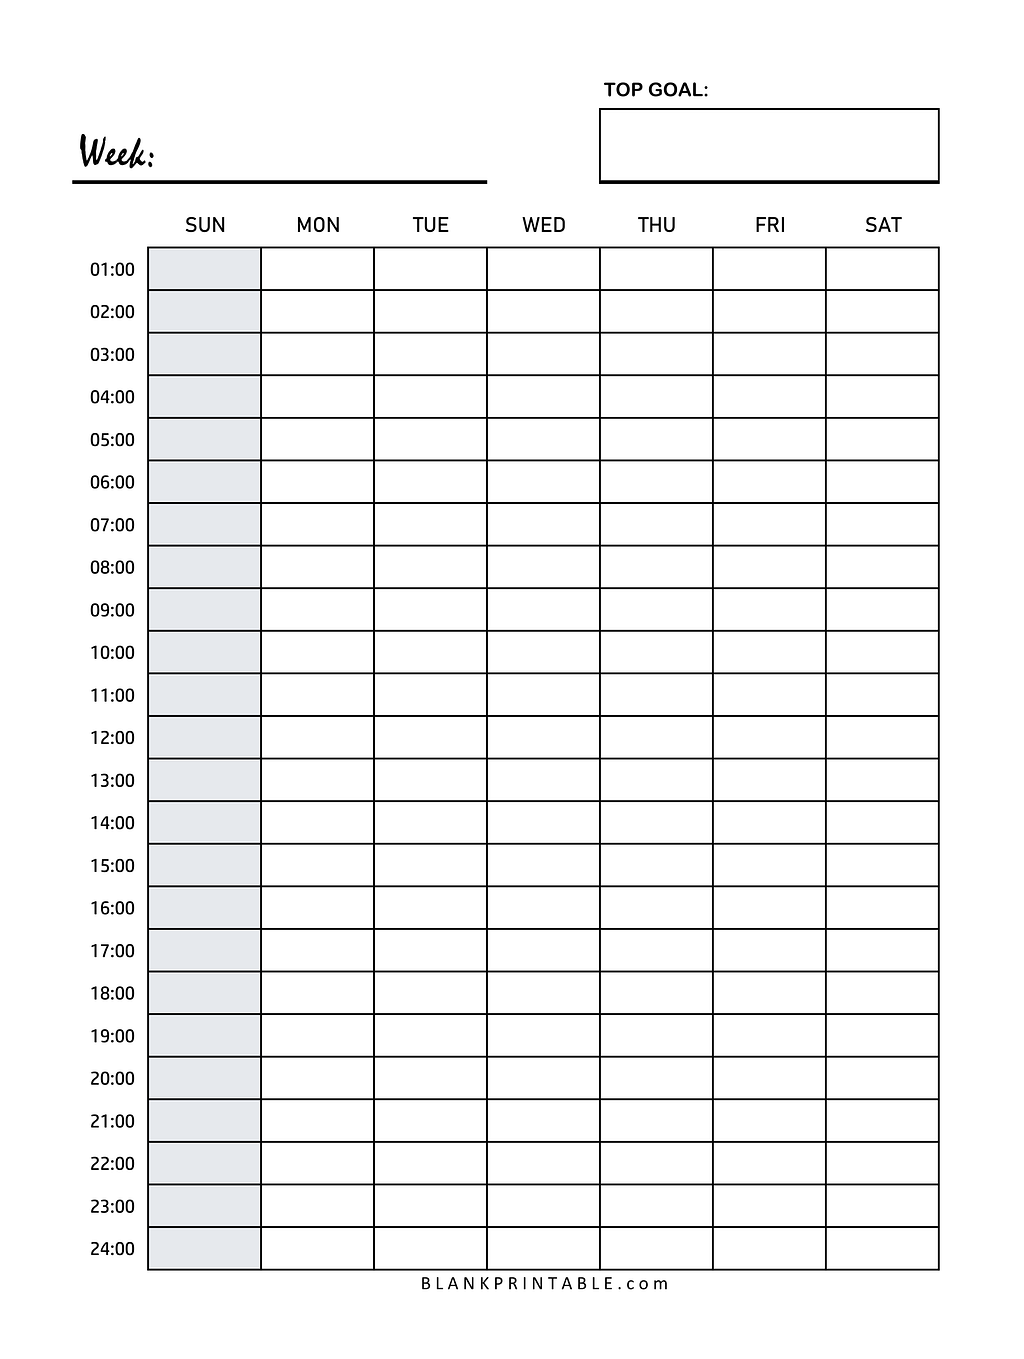 Free printable weekly schedule planner template